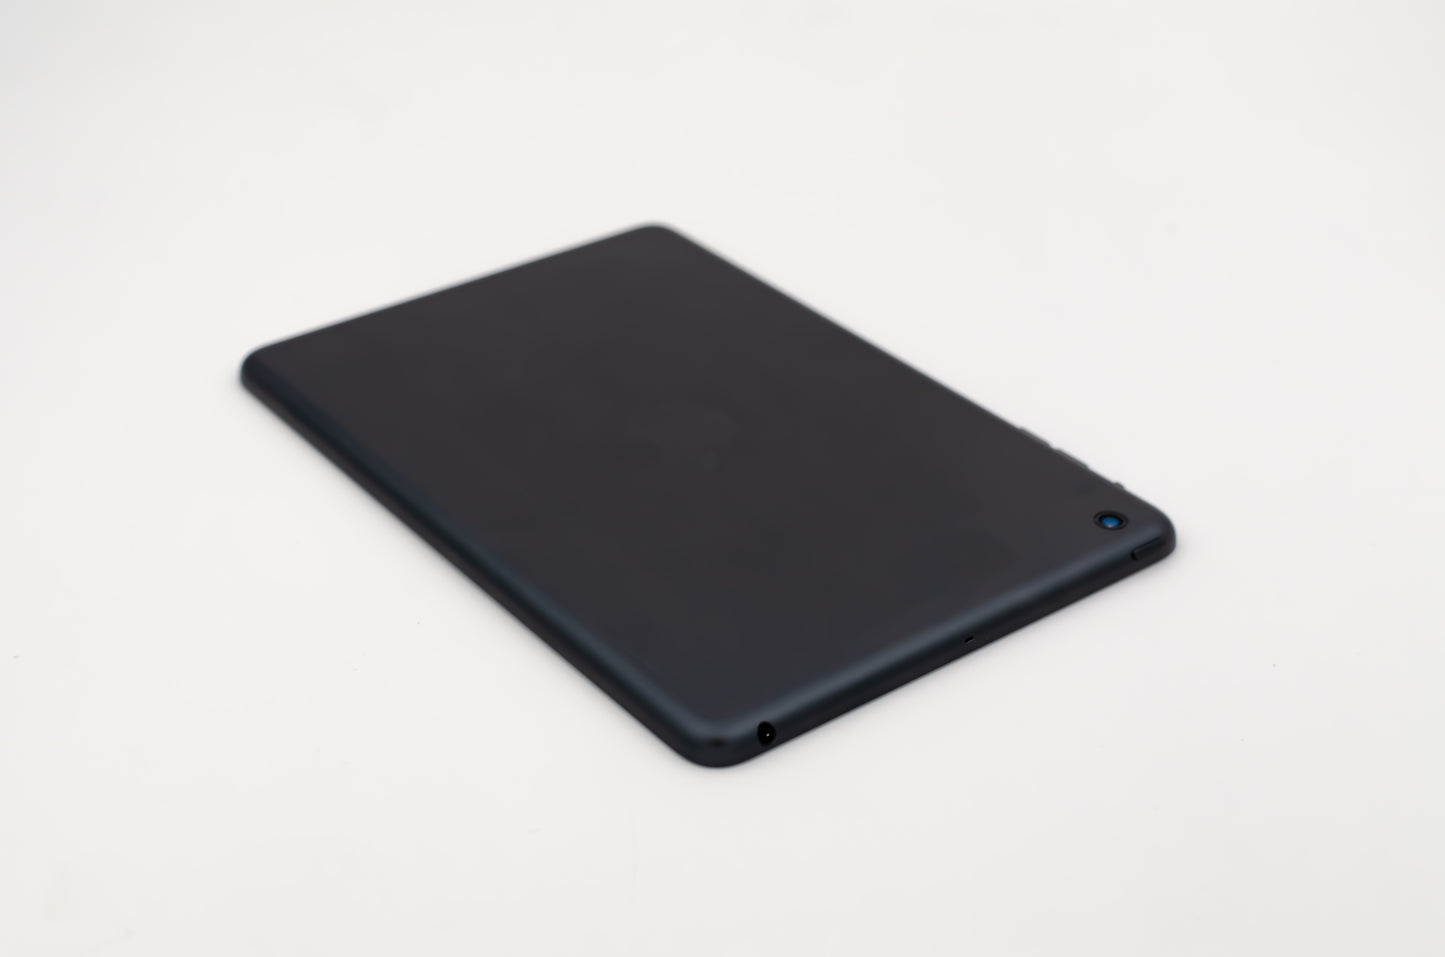 apple-2012-7.9-inch-ipad-mini-1-a1432-slate/black-3